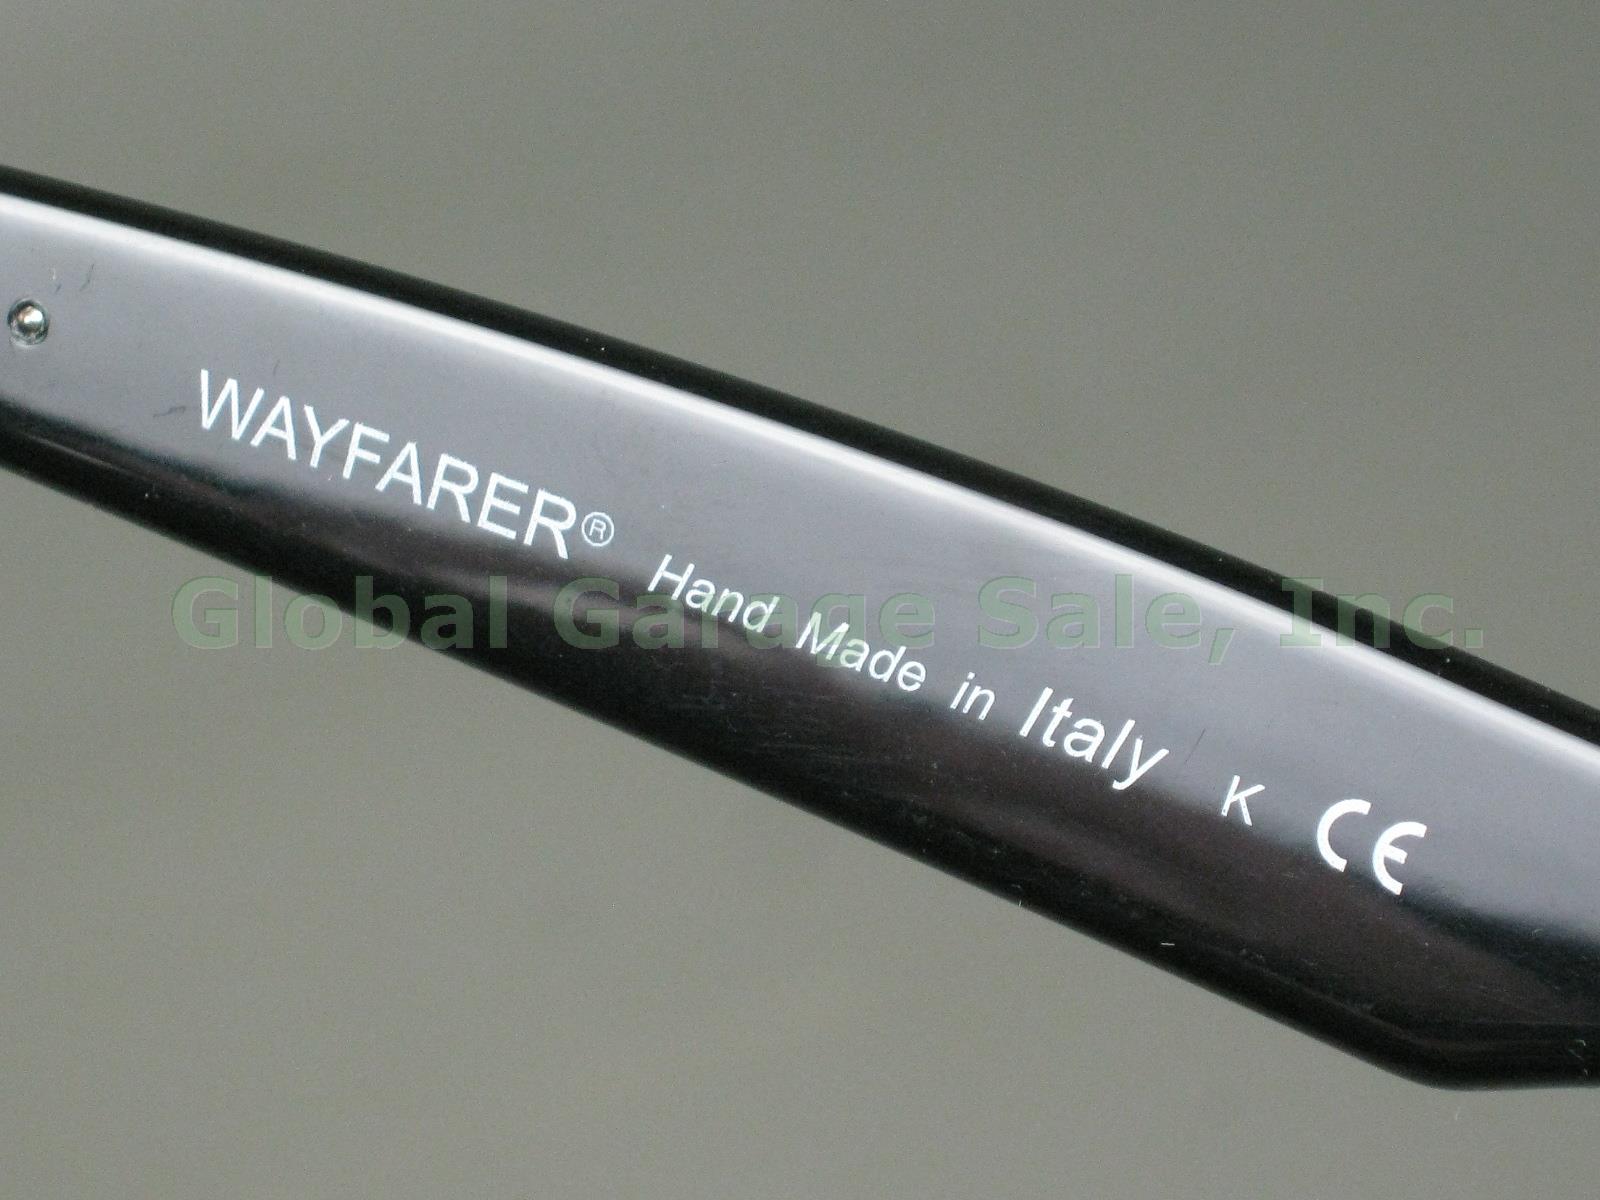 NOS Black Ray Ban Original Wayfarer Classics RB2140 Sunglasses + Case Bundle Lot 4